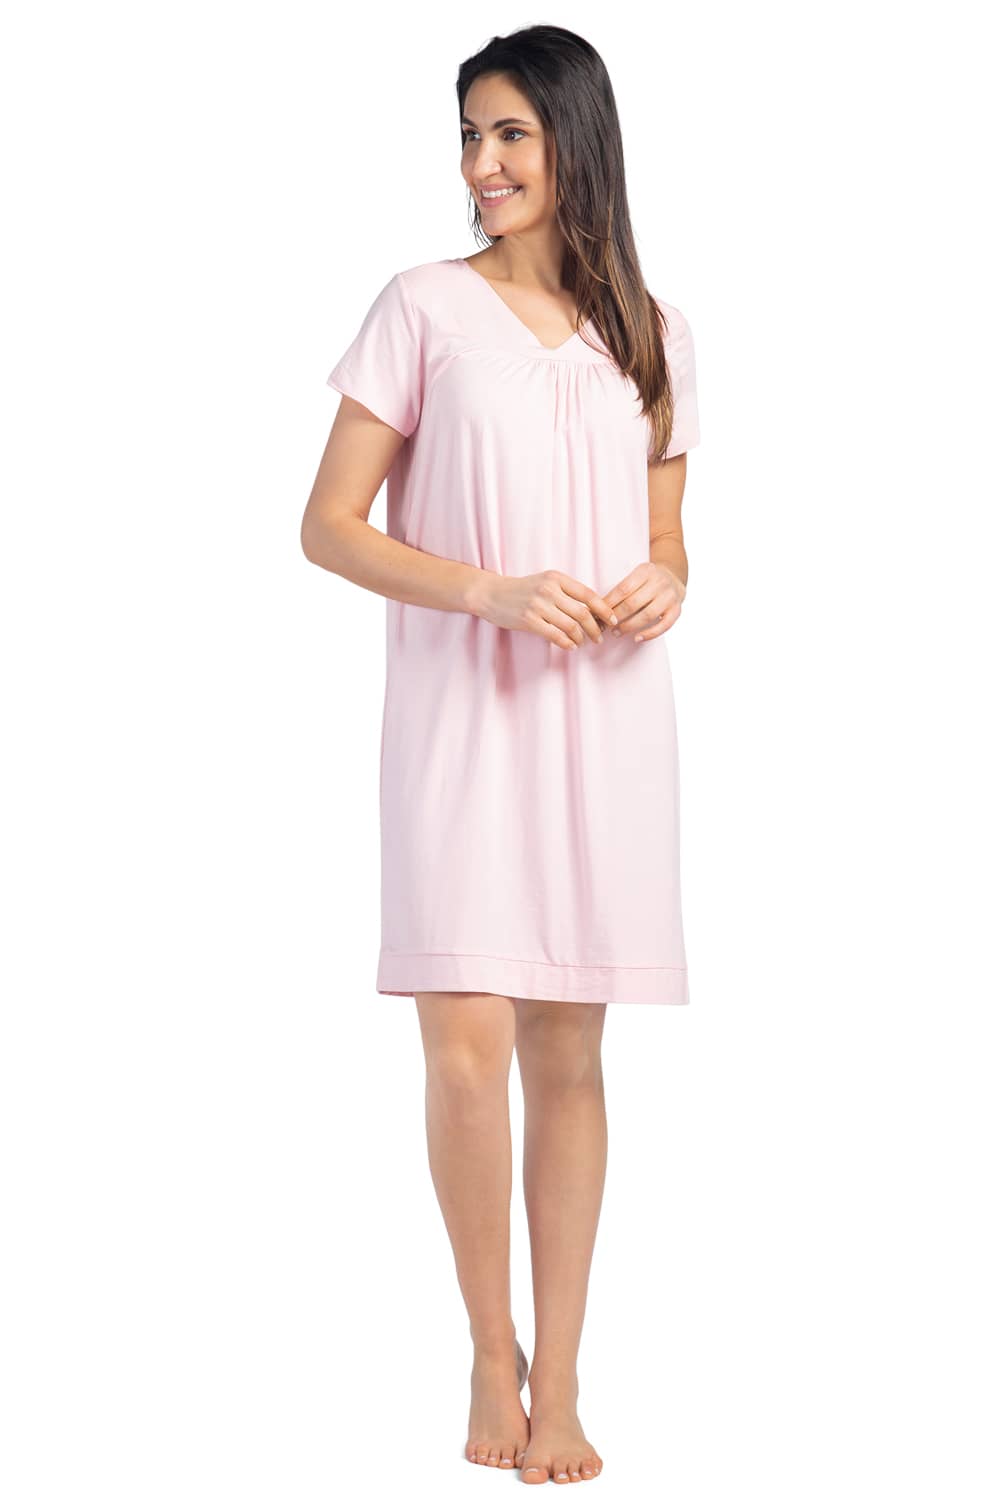 Women's Nightgown, Organic Cotton V-Neck Nightgown